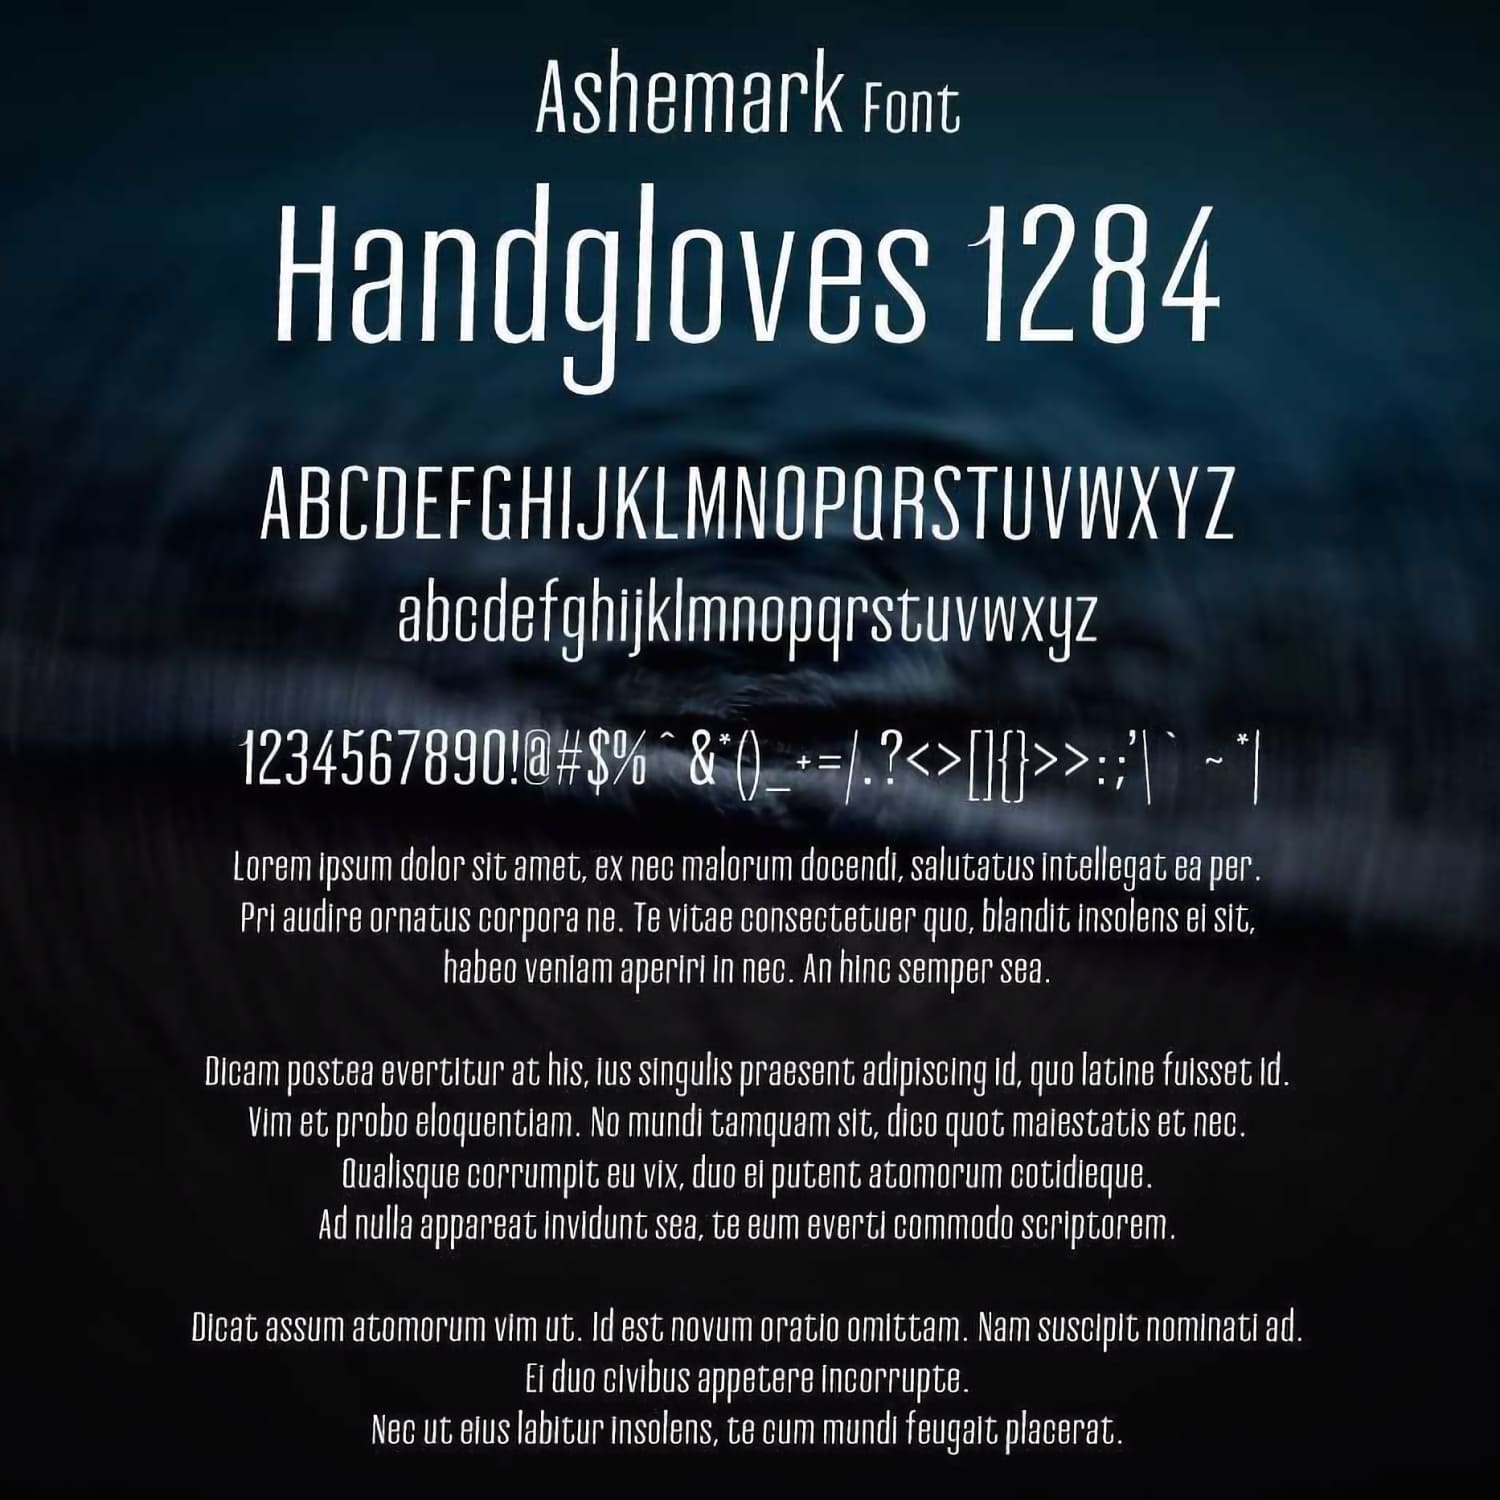 Ashemark Font cover.